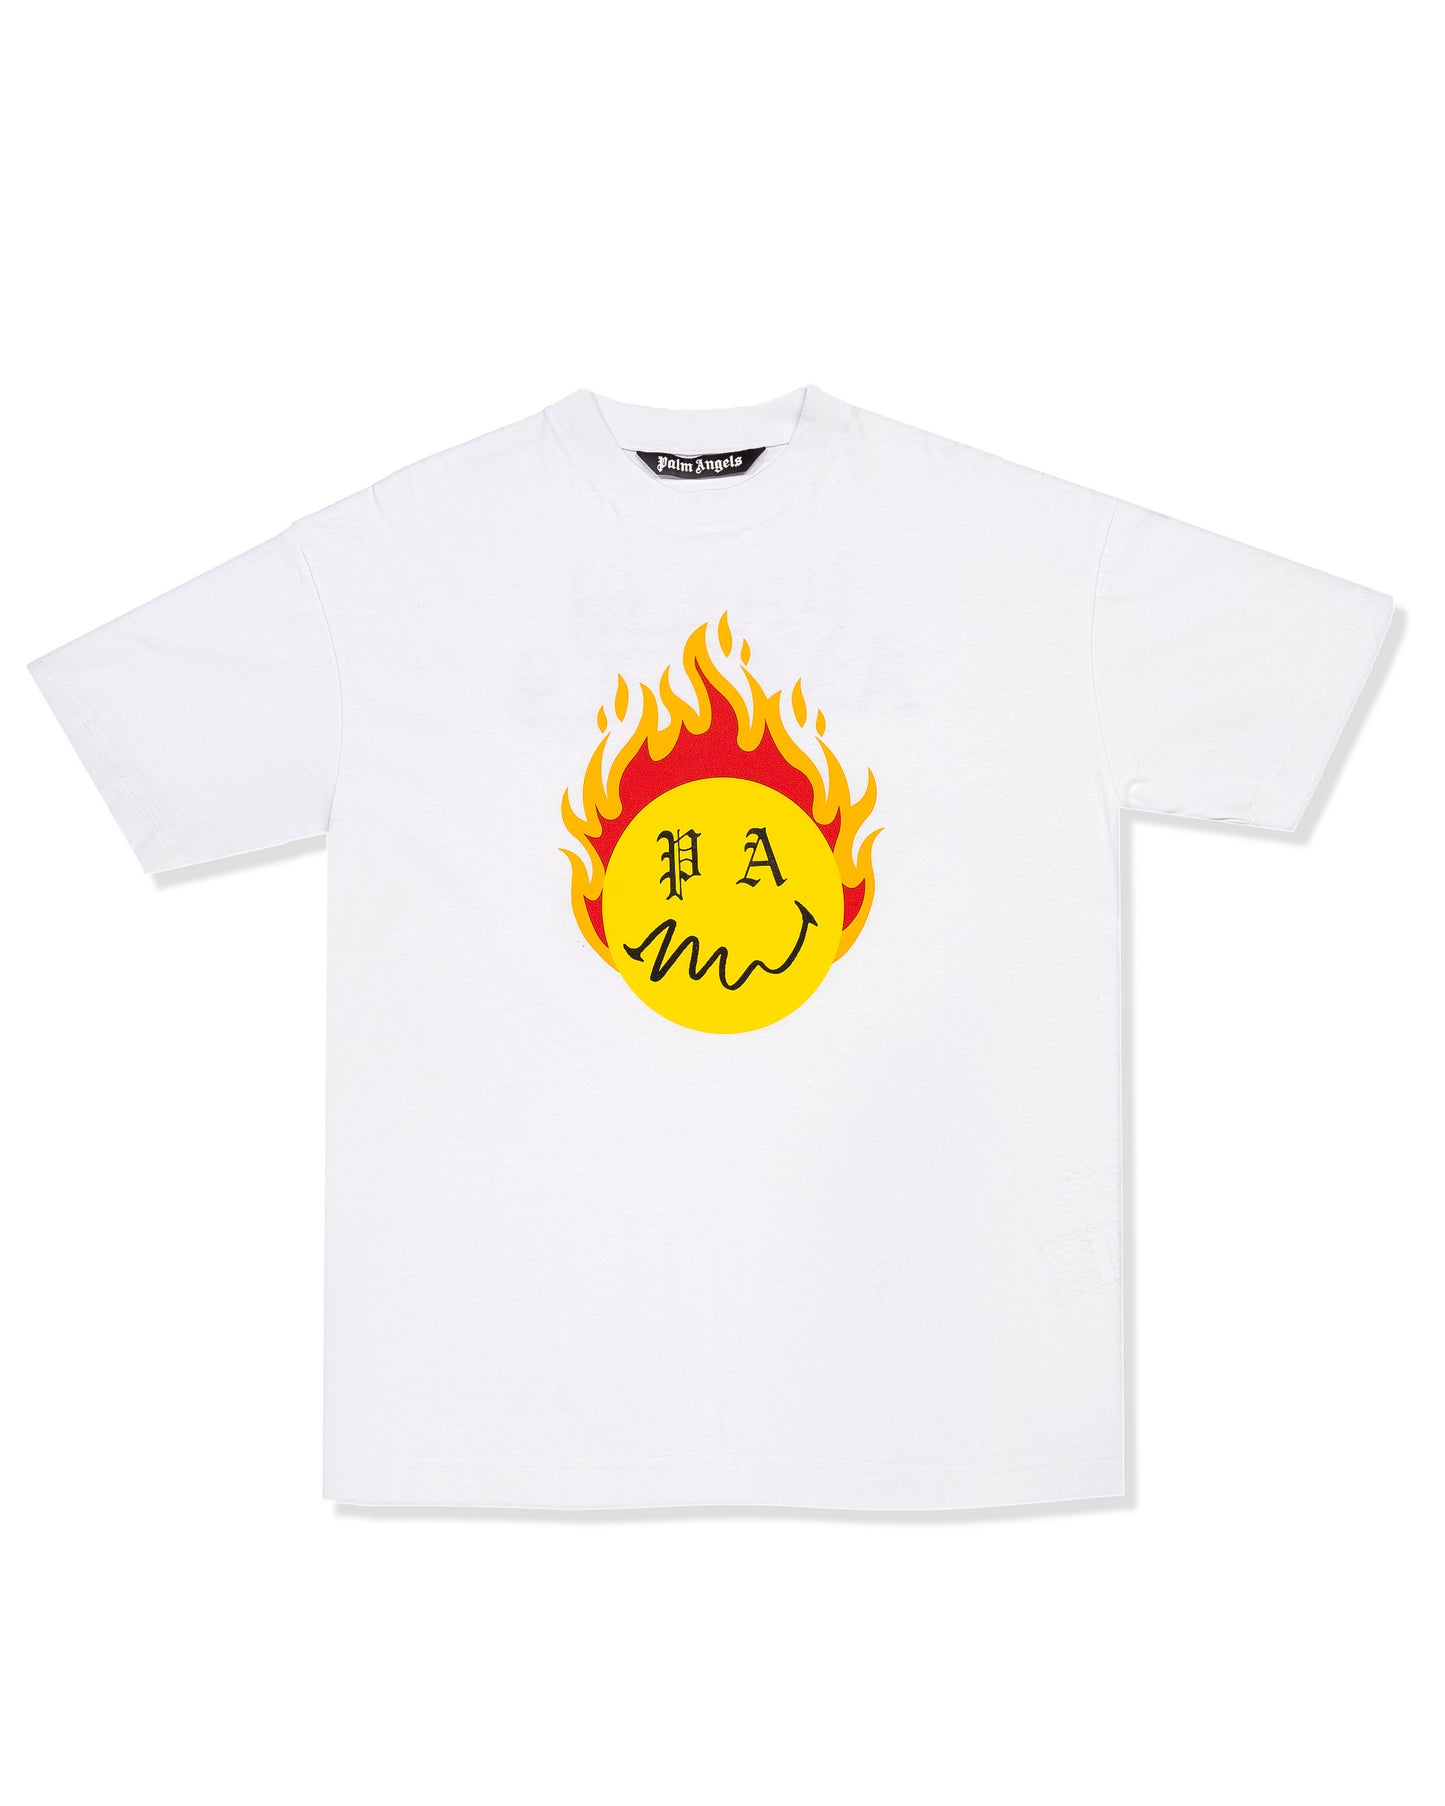 Burning Head Print White T-Shirt